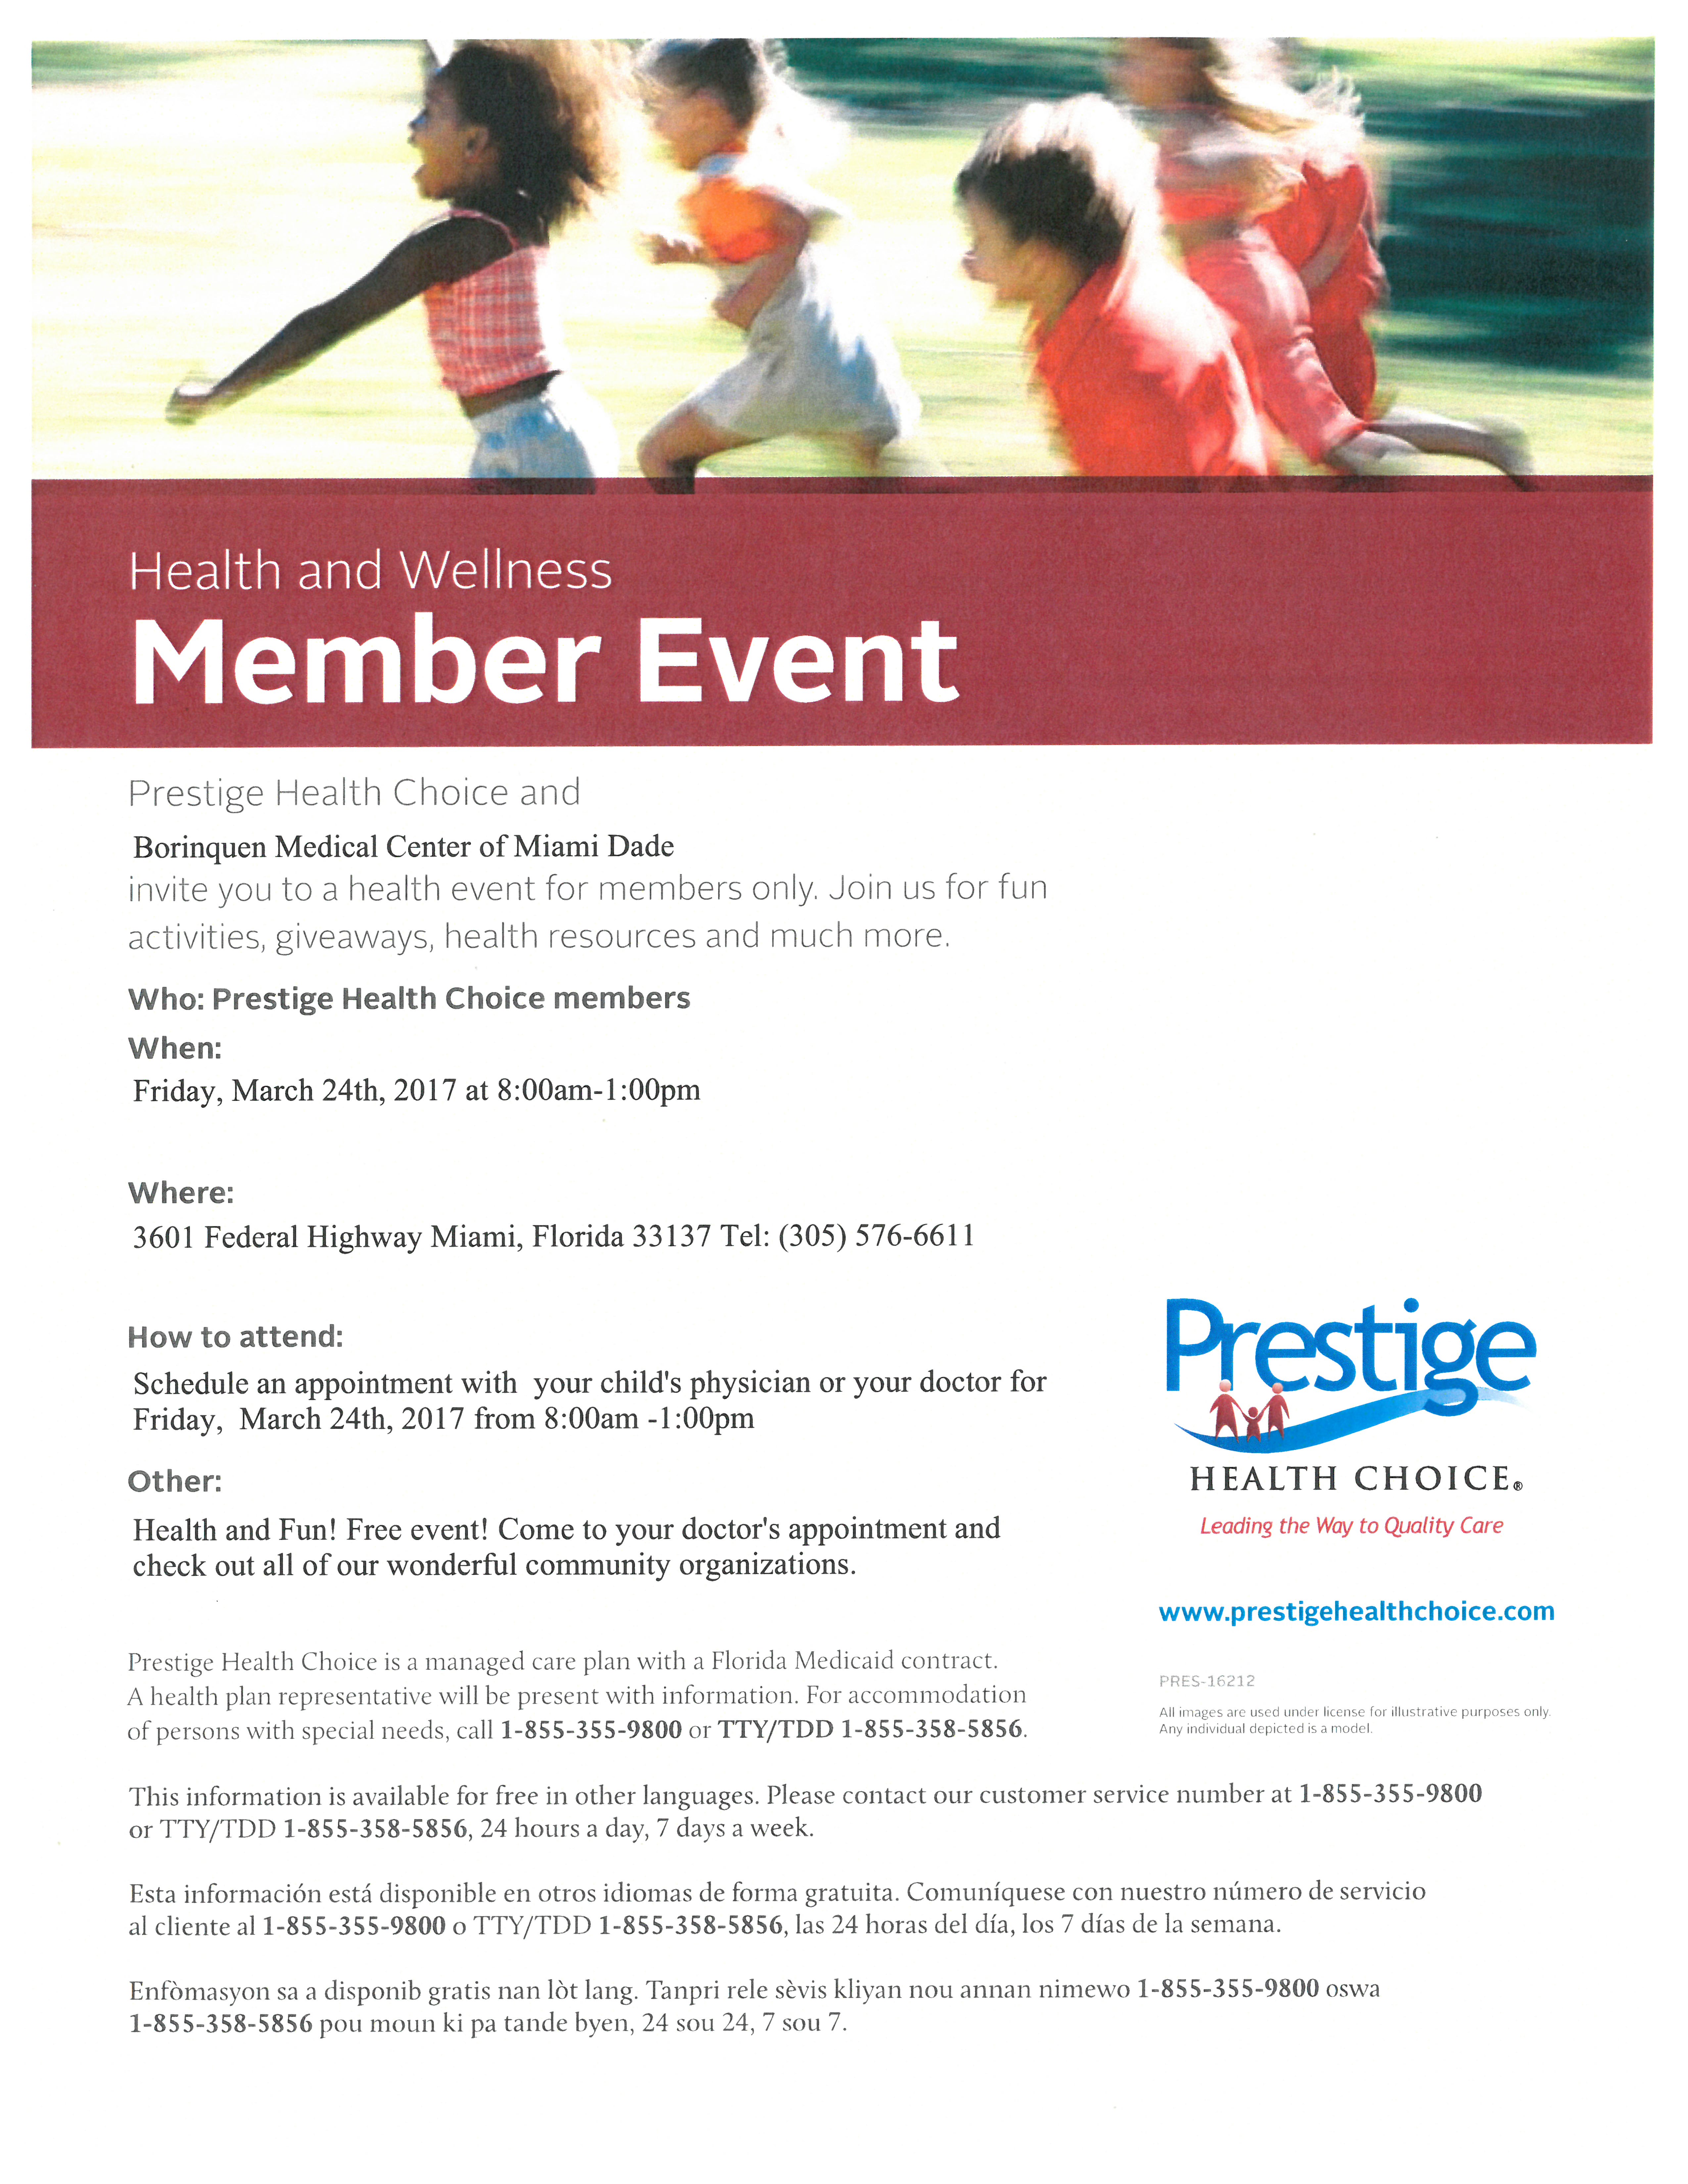 prestige health choice - member wellness event - kidz neuroscience